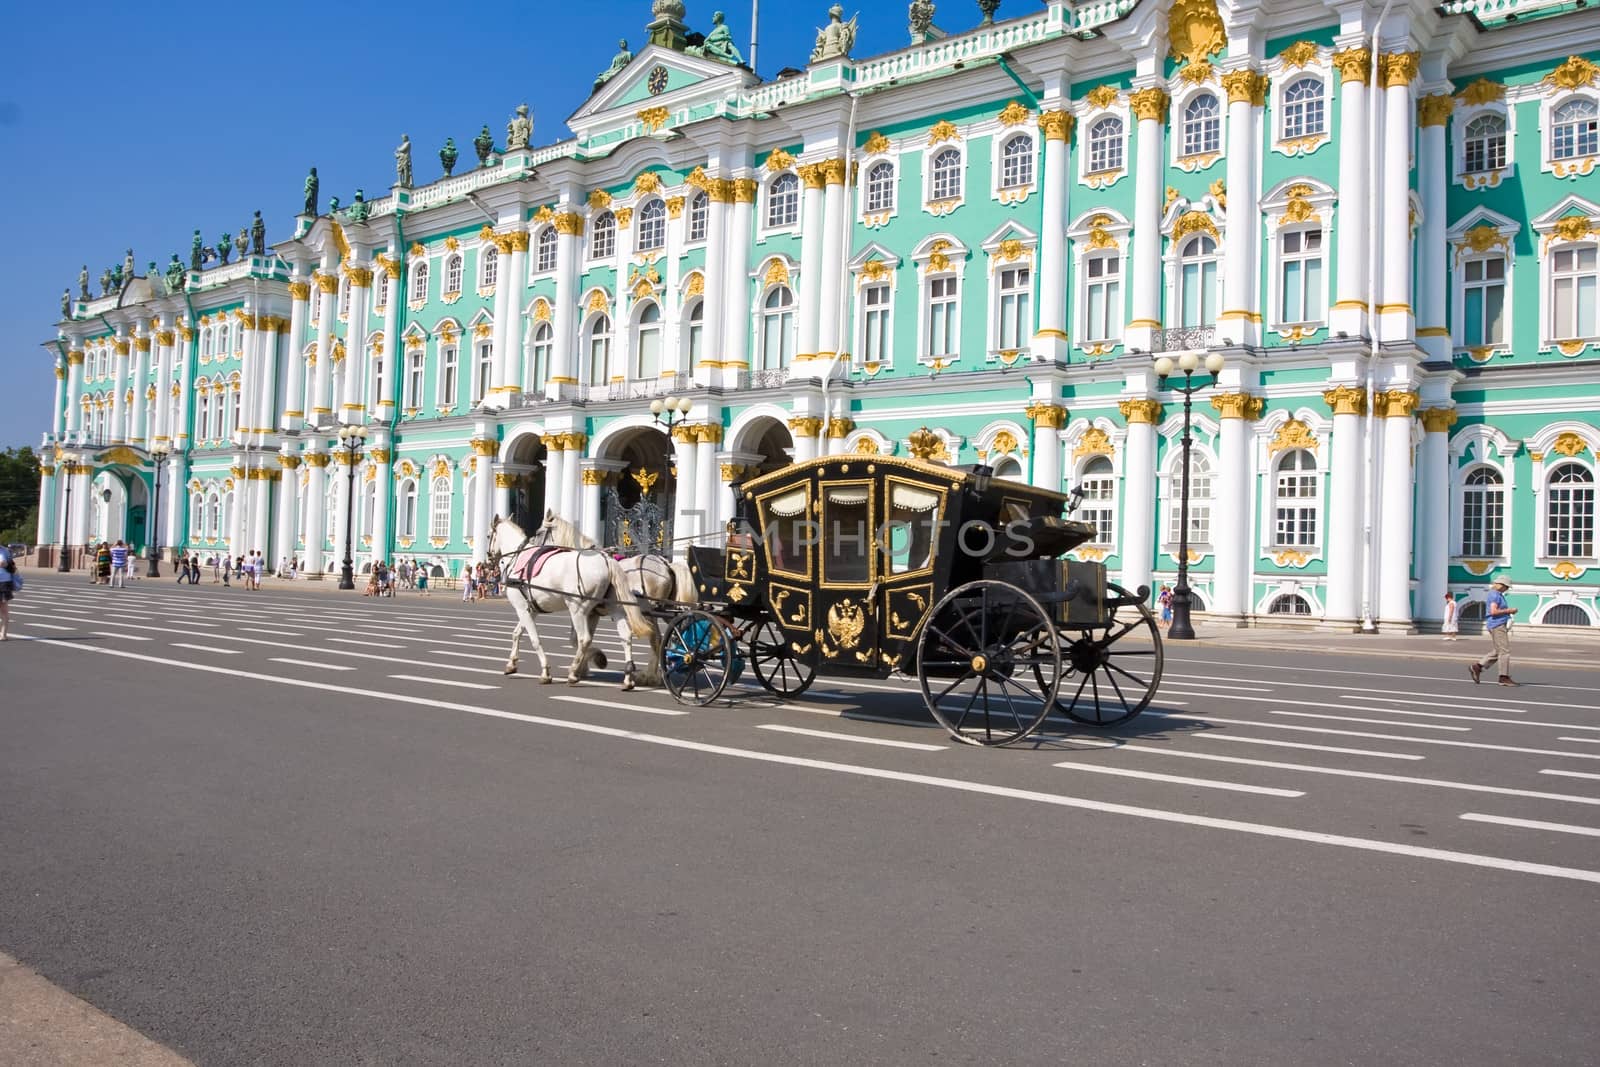 Hermitage Museum - Winter palace of Russian kings,  Saint Petersburg, Russia